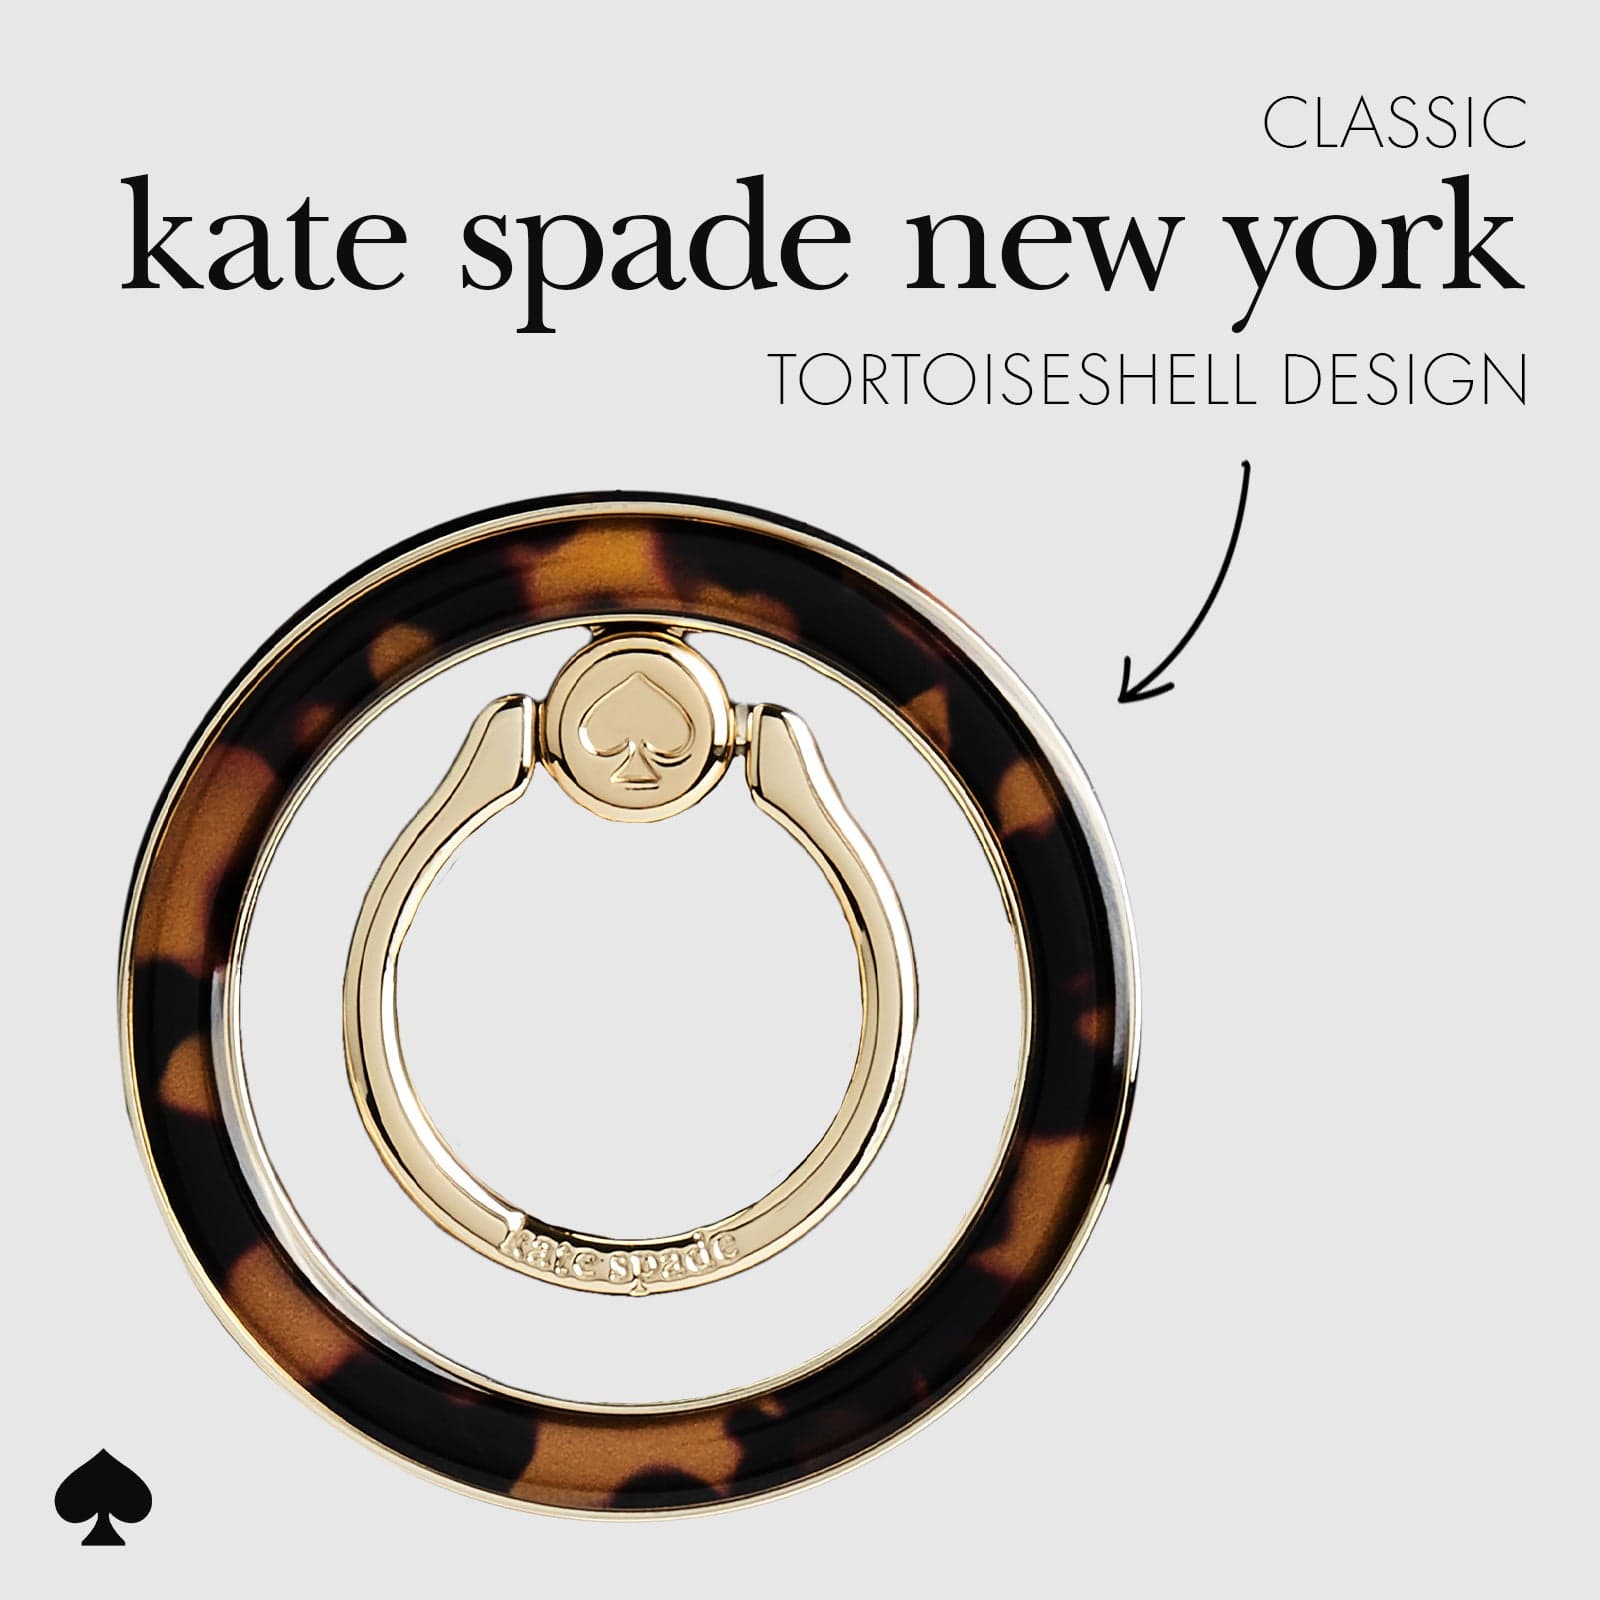 CLASSIC KATE SPADE NEW YORK TORTOISESHELL DESIGN